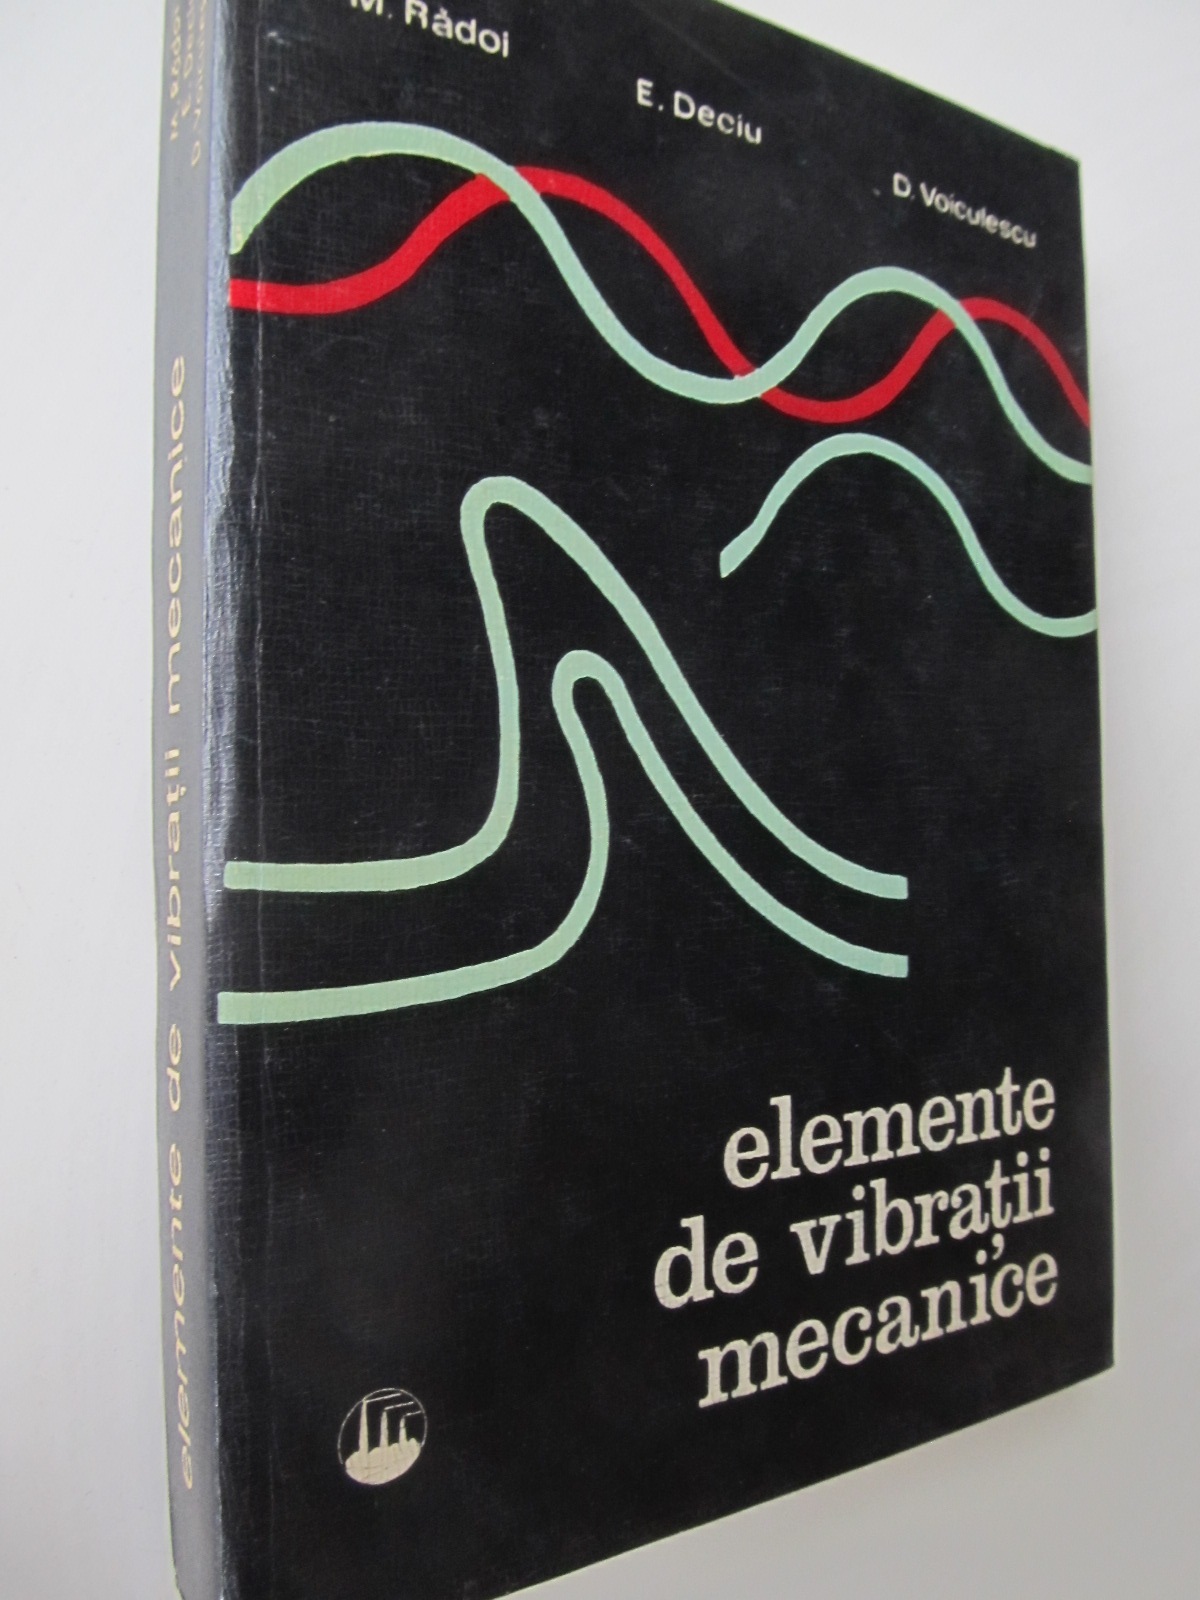 Elemente de vibratii mecanice - M. Radoi , E. Deciu , D. Voiculescu | Detalii carte